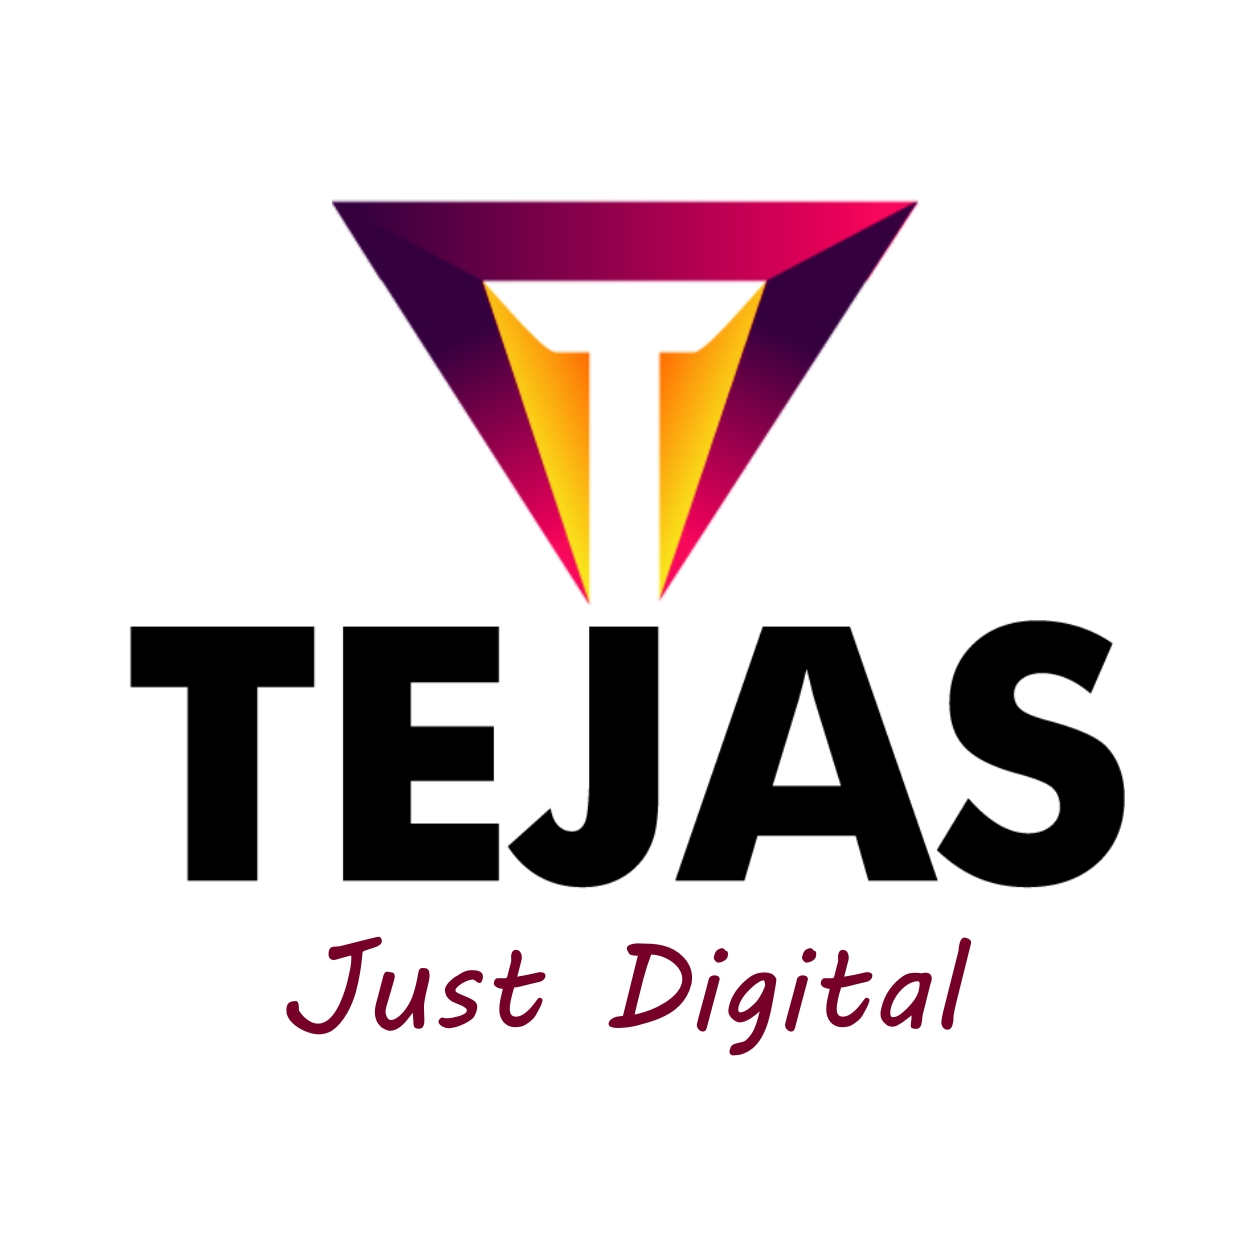 TEJAS-Just Digital